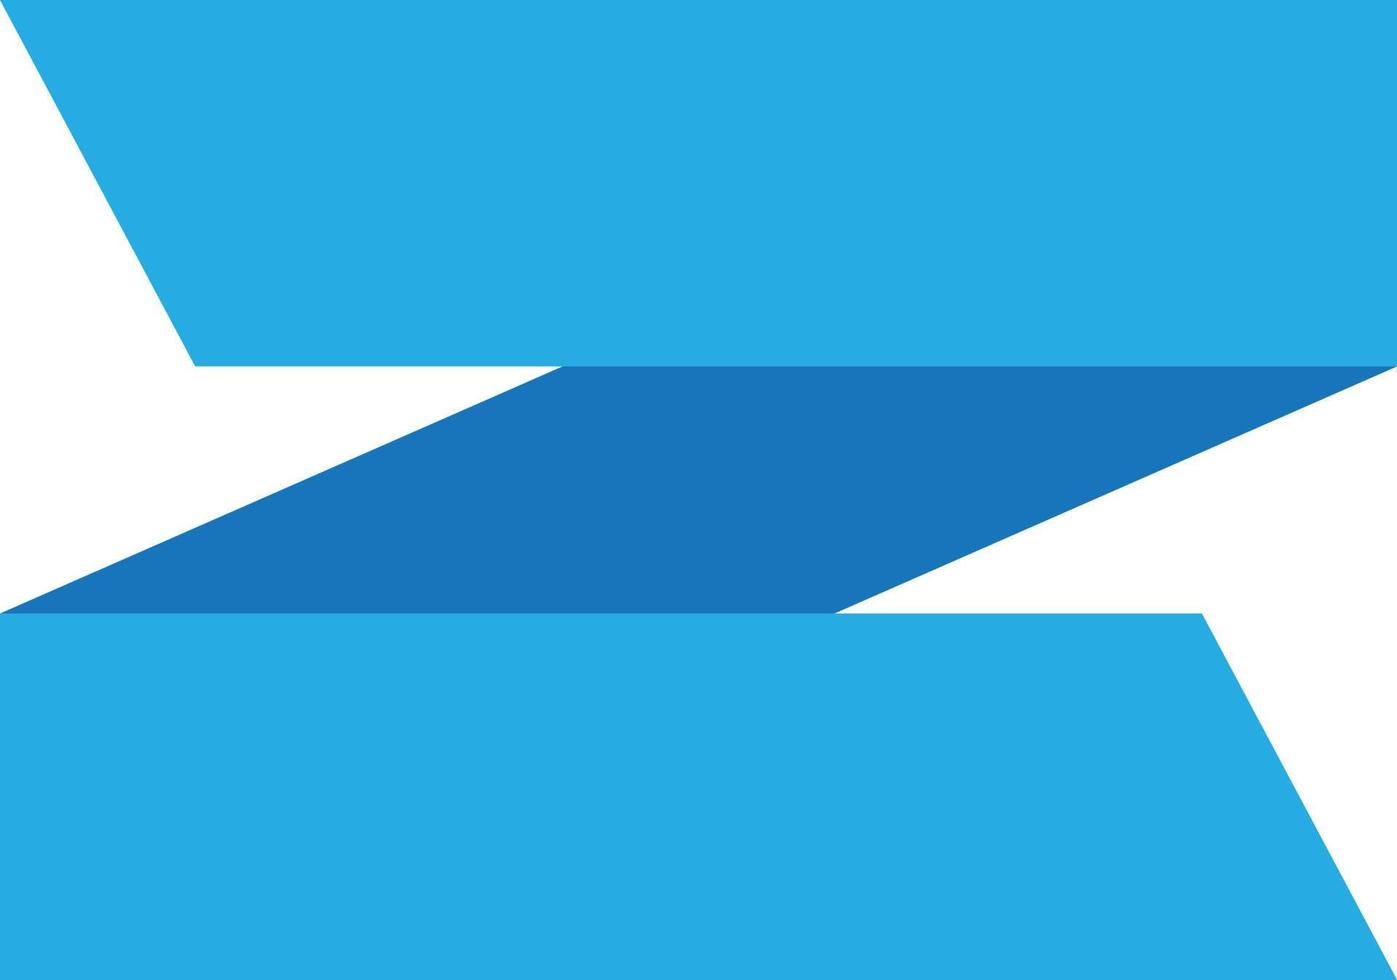 blue ribbon banner on white background. blue ribbon banner sign. vector